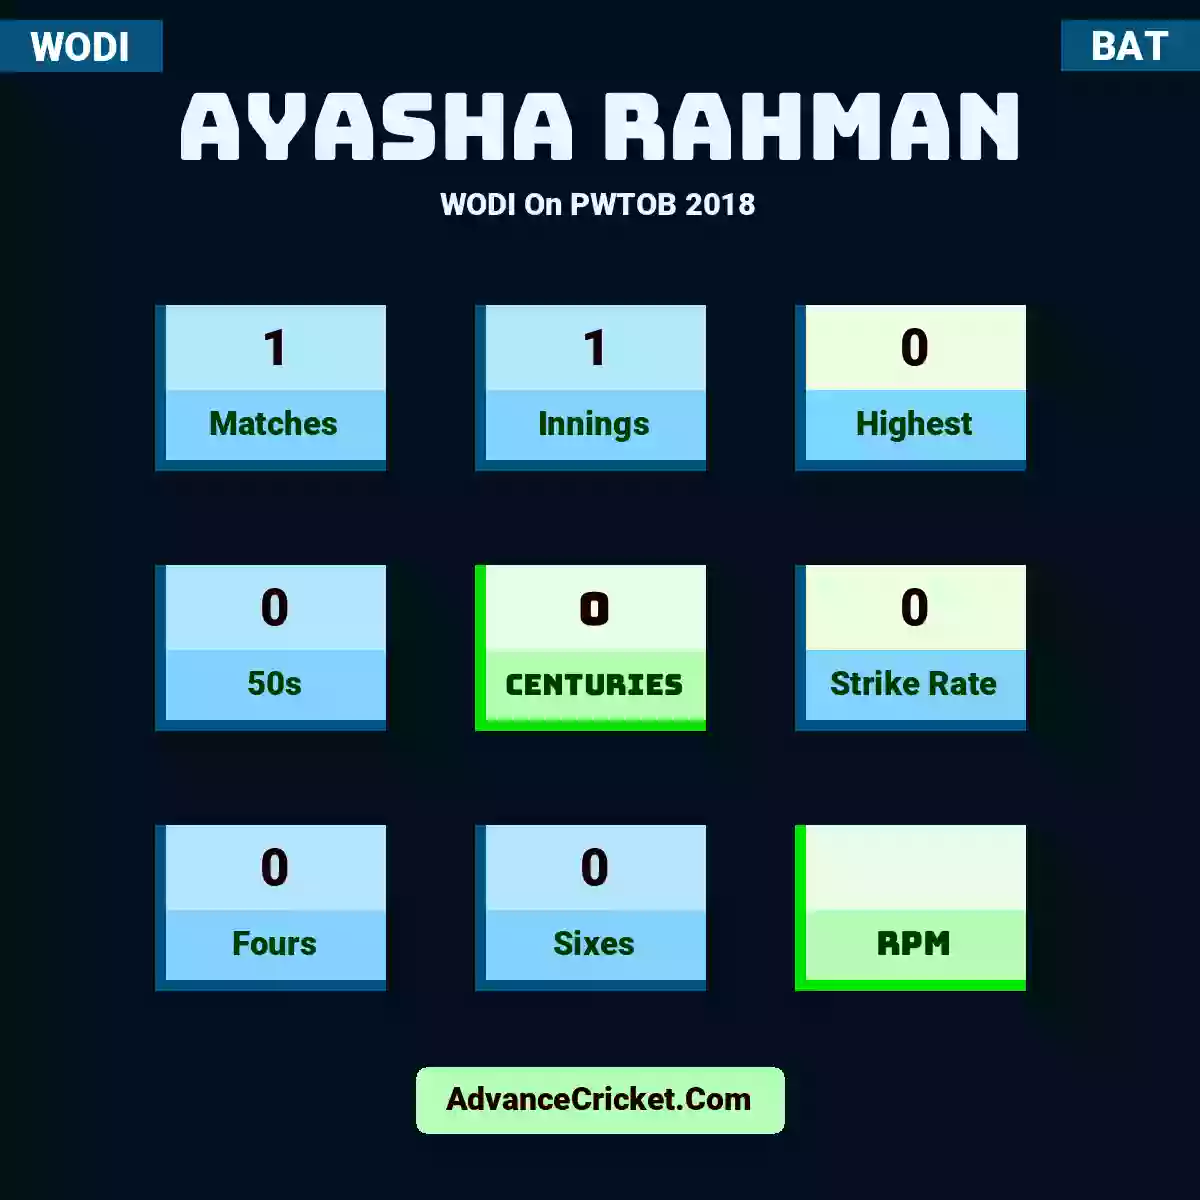 Ayasha Rahman WODI  On PWTOB 2018, Ayasha Rahman played 1 matches, scored 0 runs as highest, 0 half-centuries, and 0 centuries, with a strike rate of 0. A.Rahman hit 0 fours and 0 sixes.